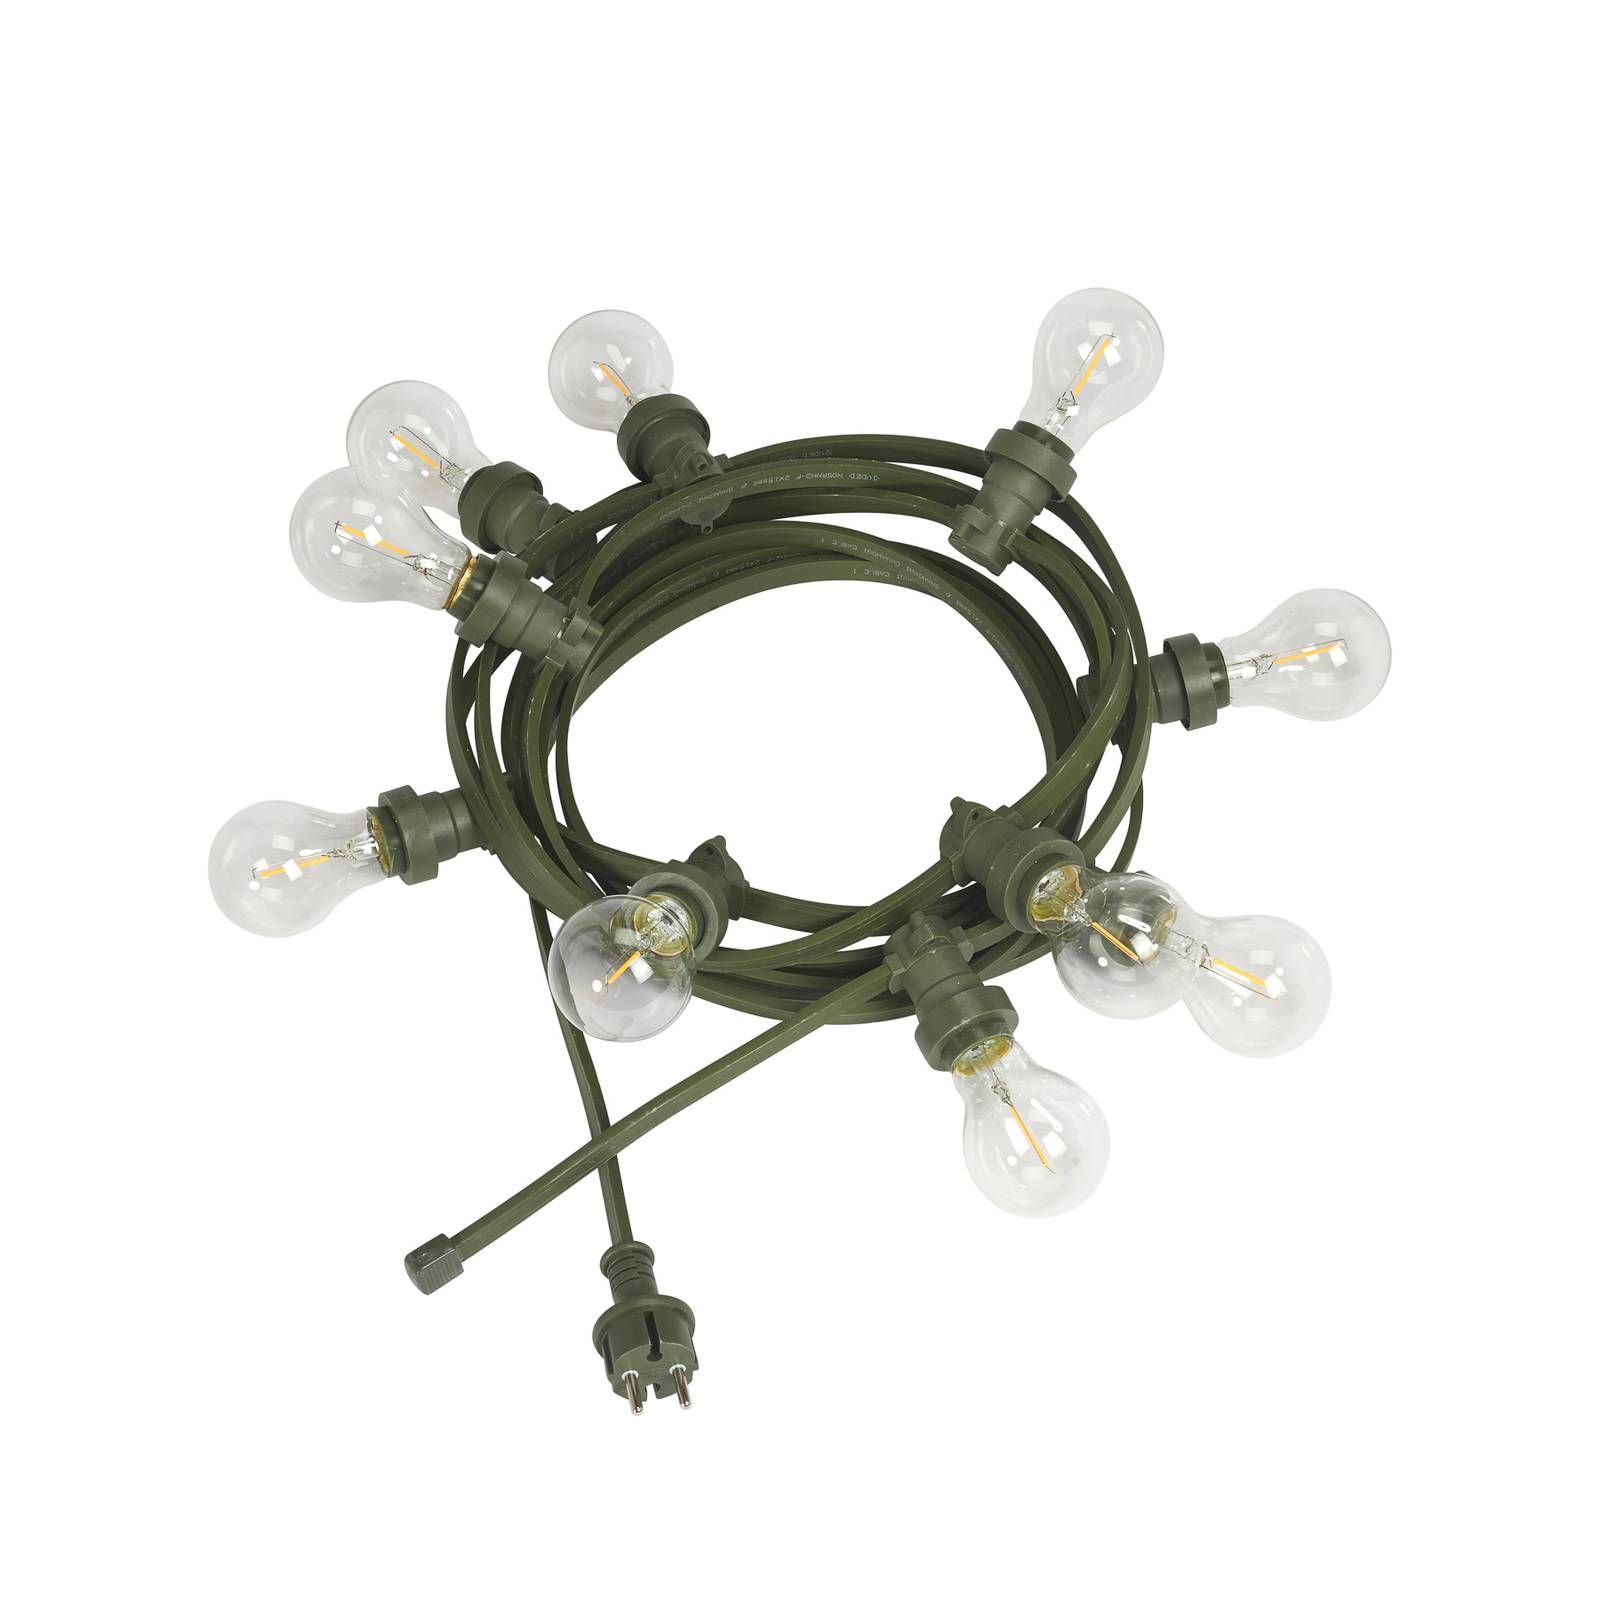 PR Home Bright svetelná LED reťaz 10pl číra zelená, guma, E27, 1W, P: 720 cm, L: 6 cm, K: 5cm